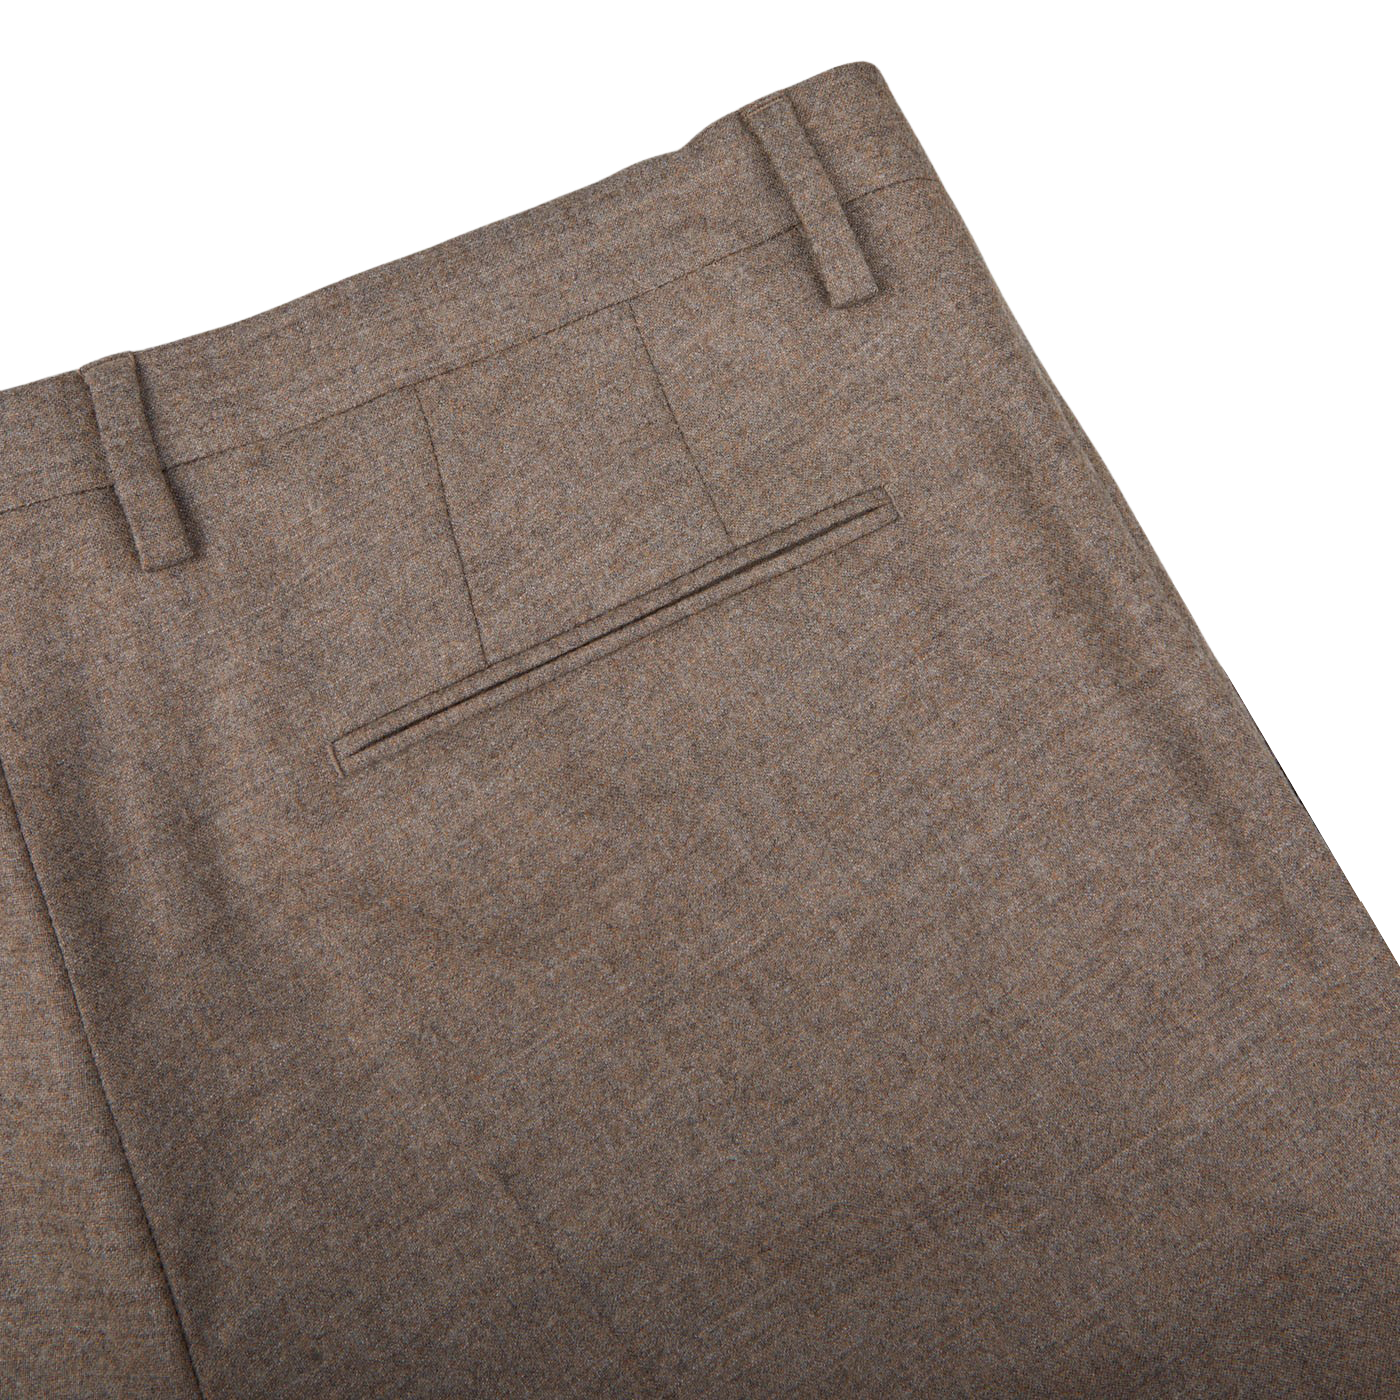 A close up of Boglioli's Beige Grey Wool Flannel K Suit pants